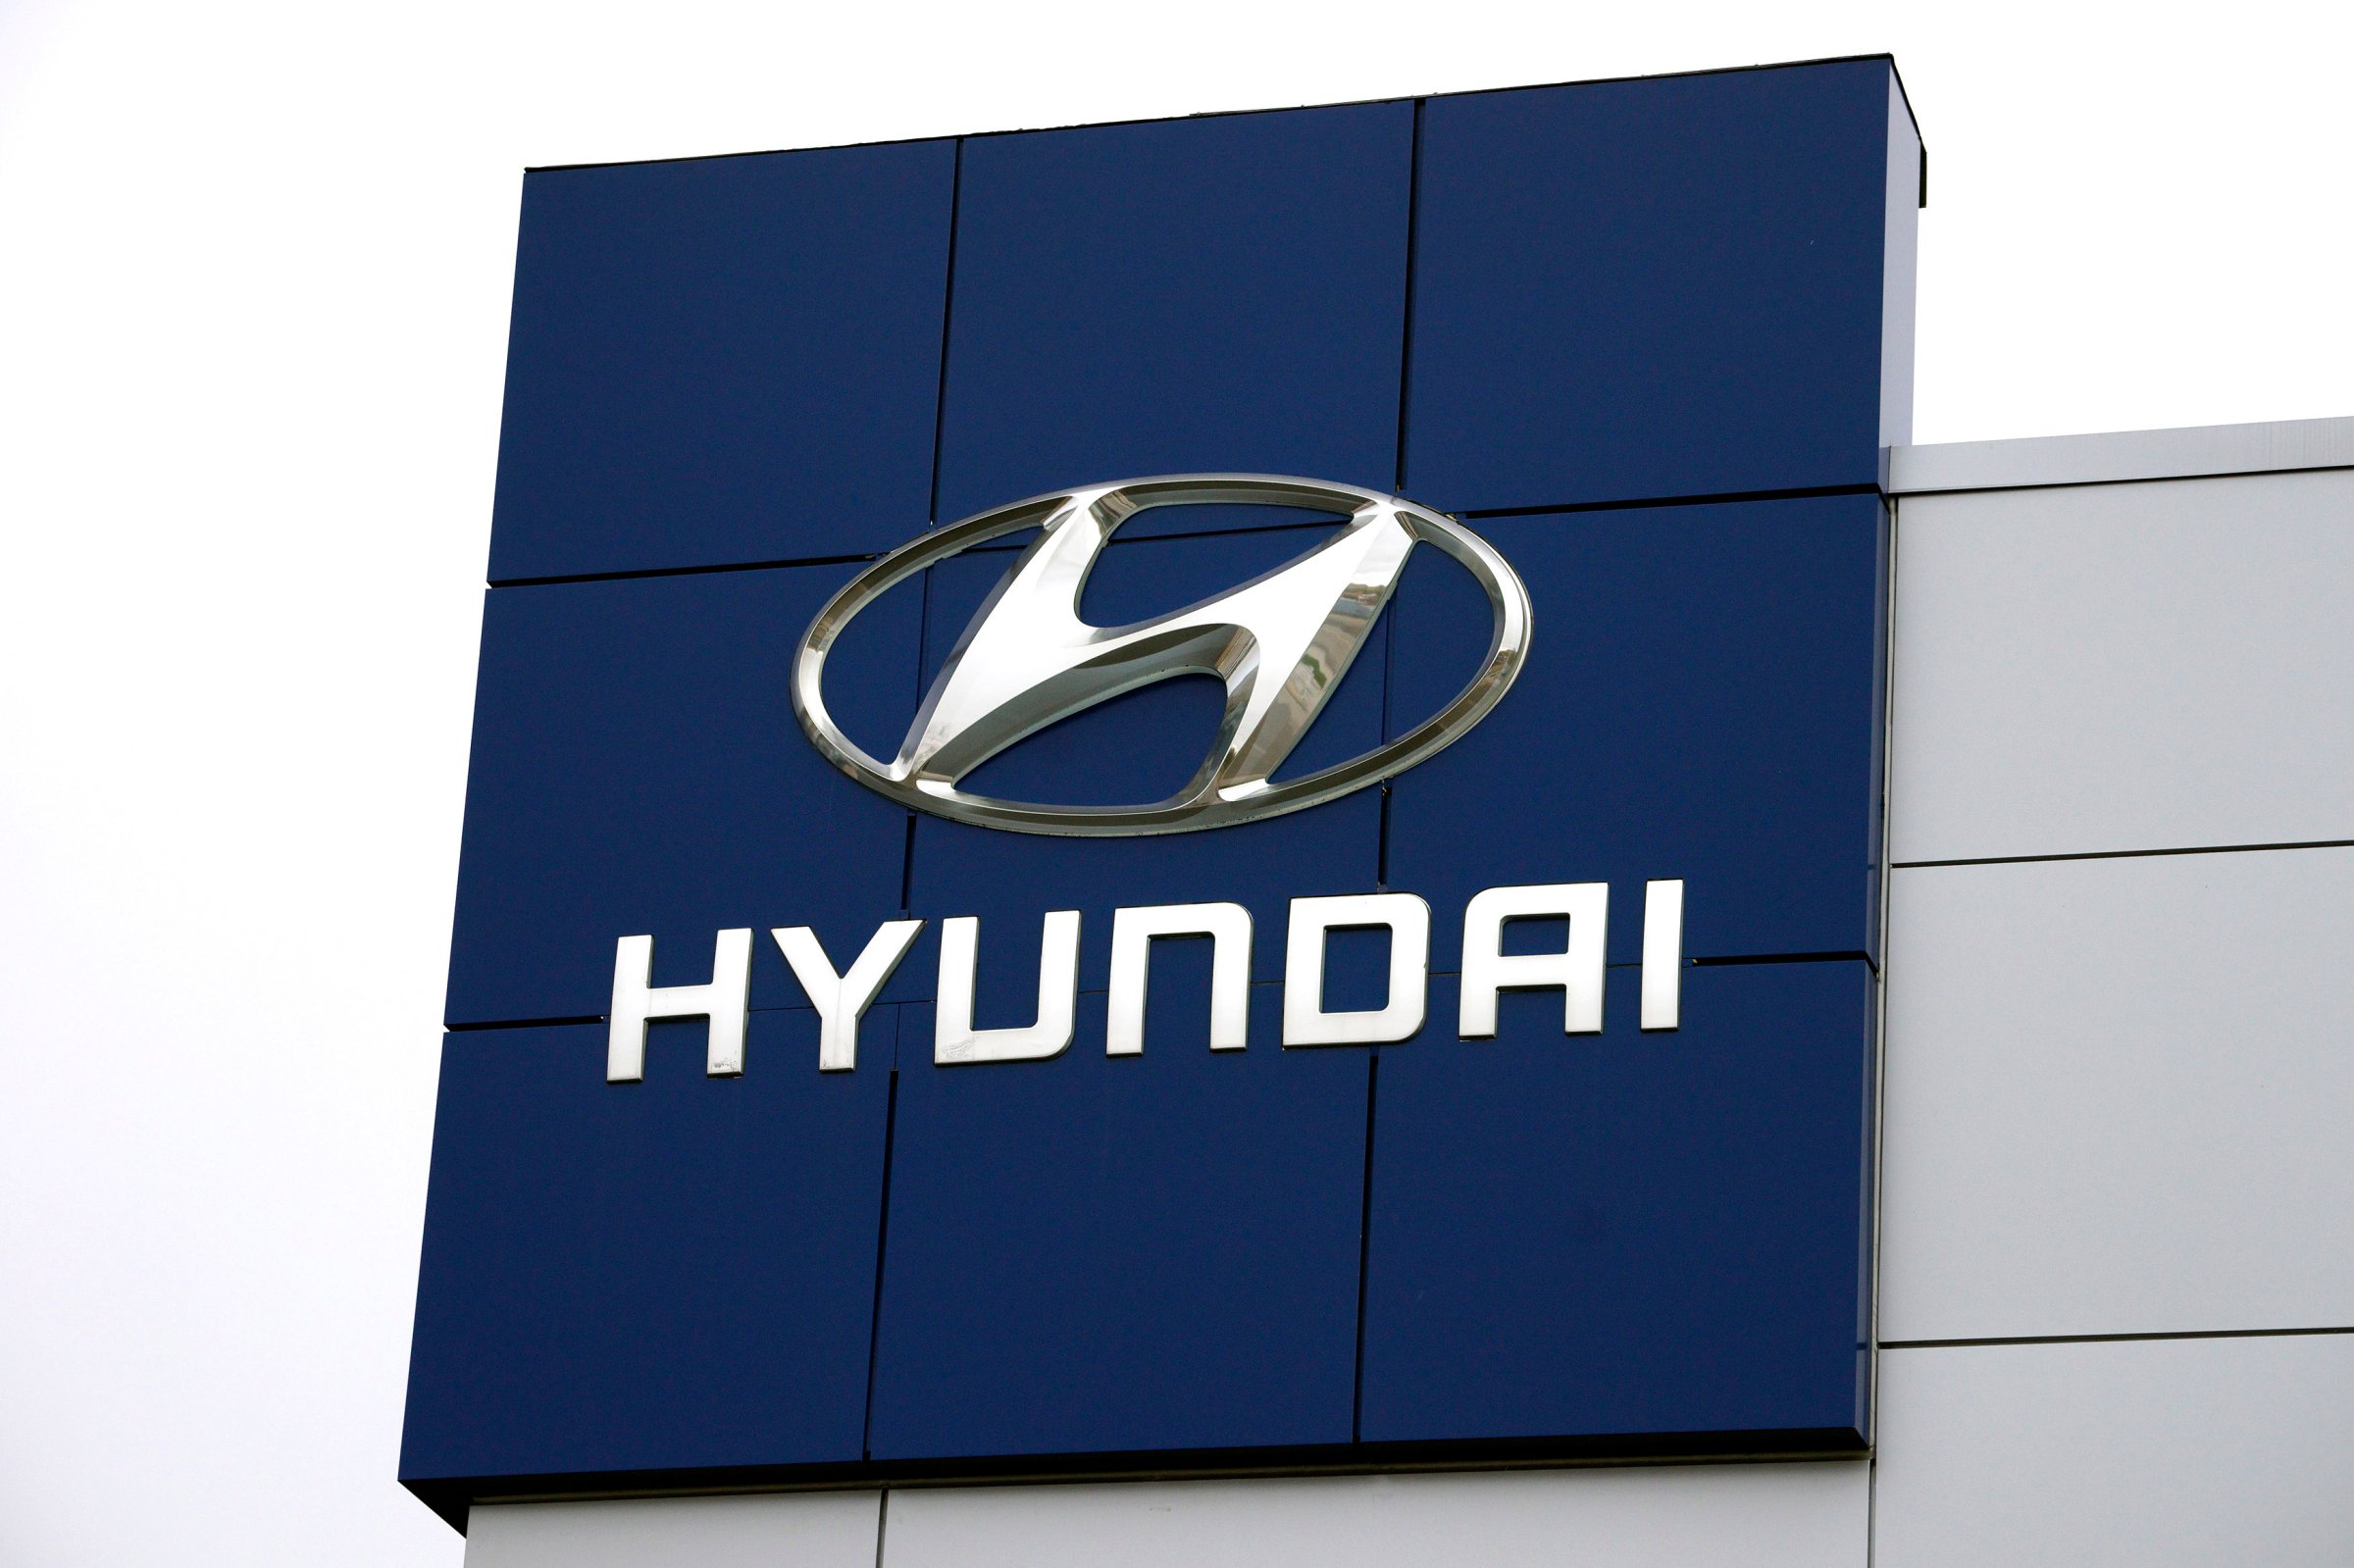 The Hyundai logo is seen outside a Hyundai car dealer in Golden